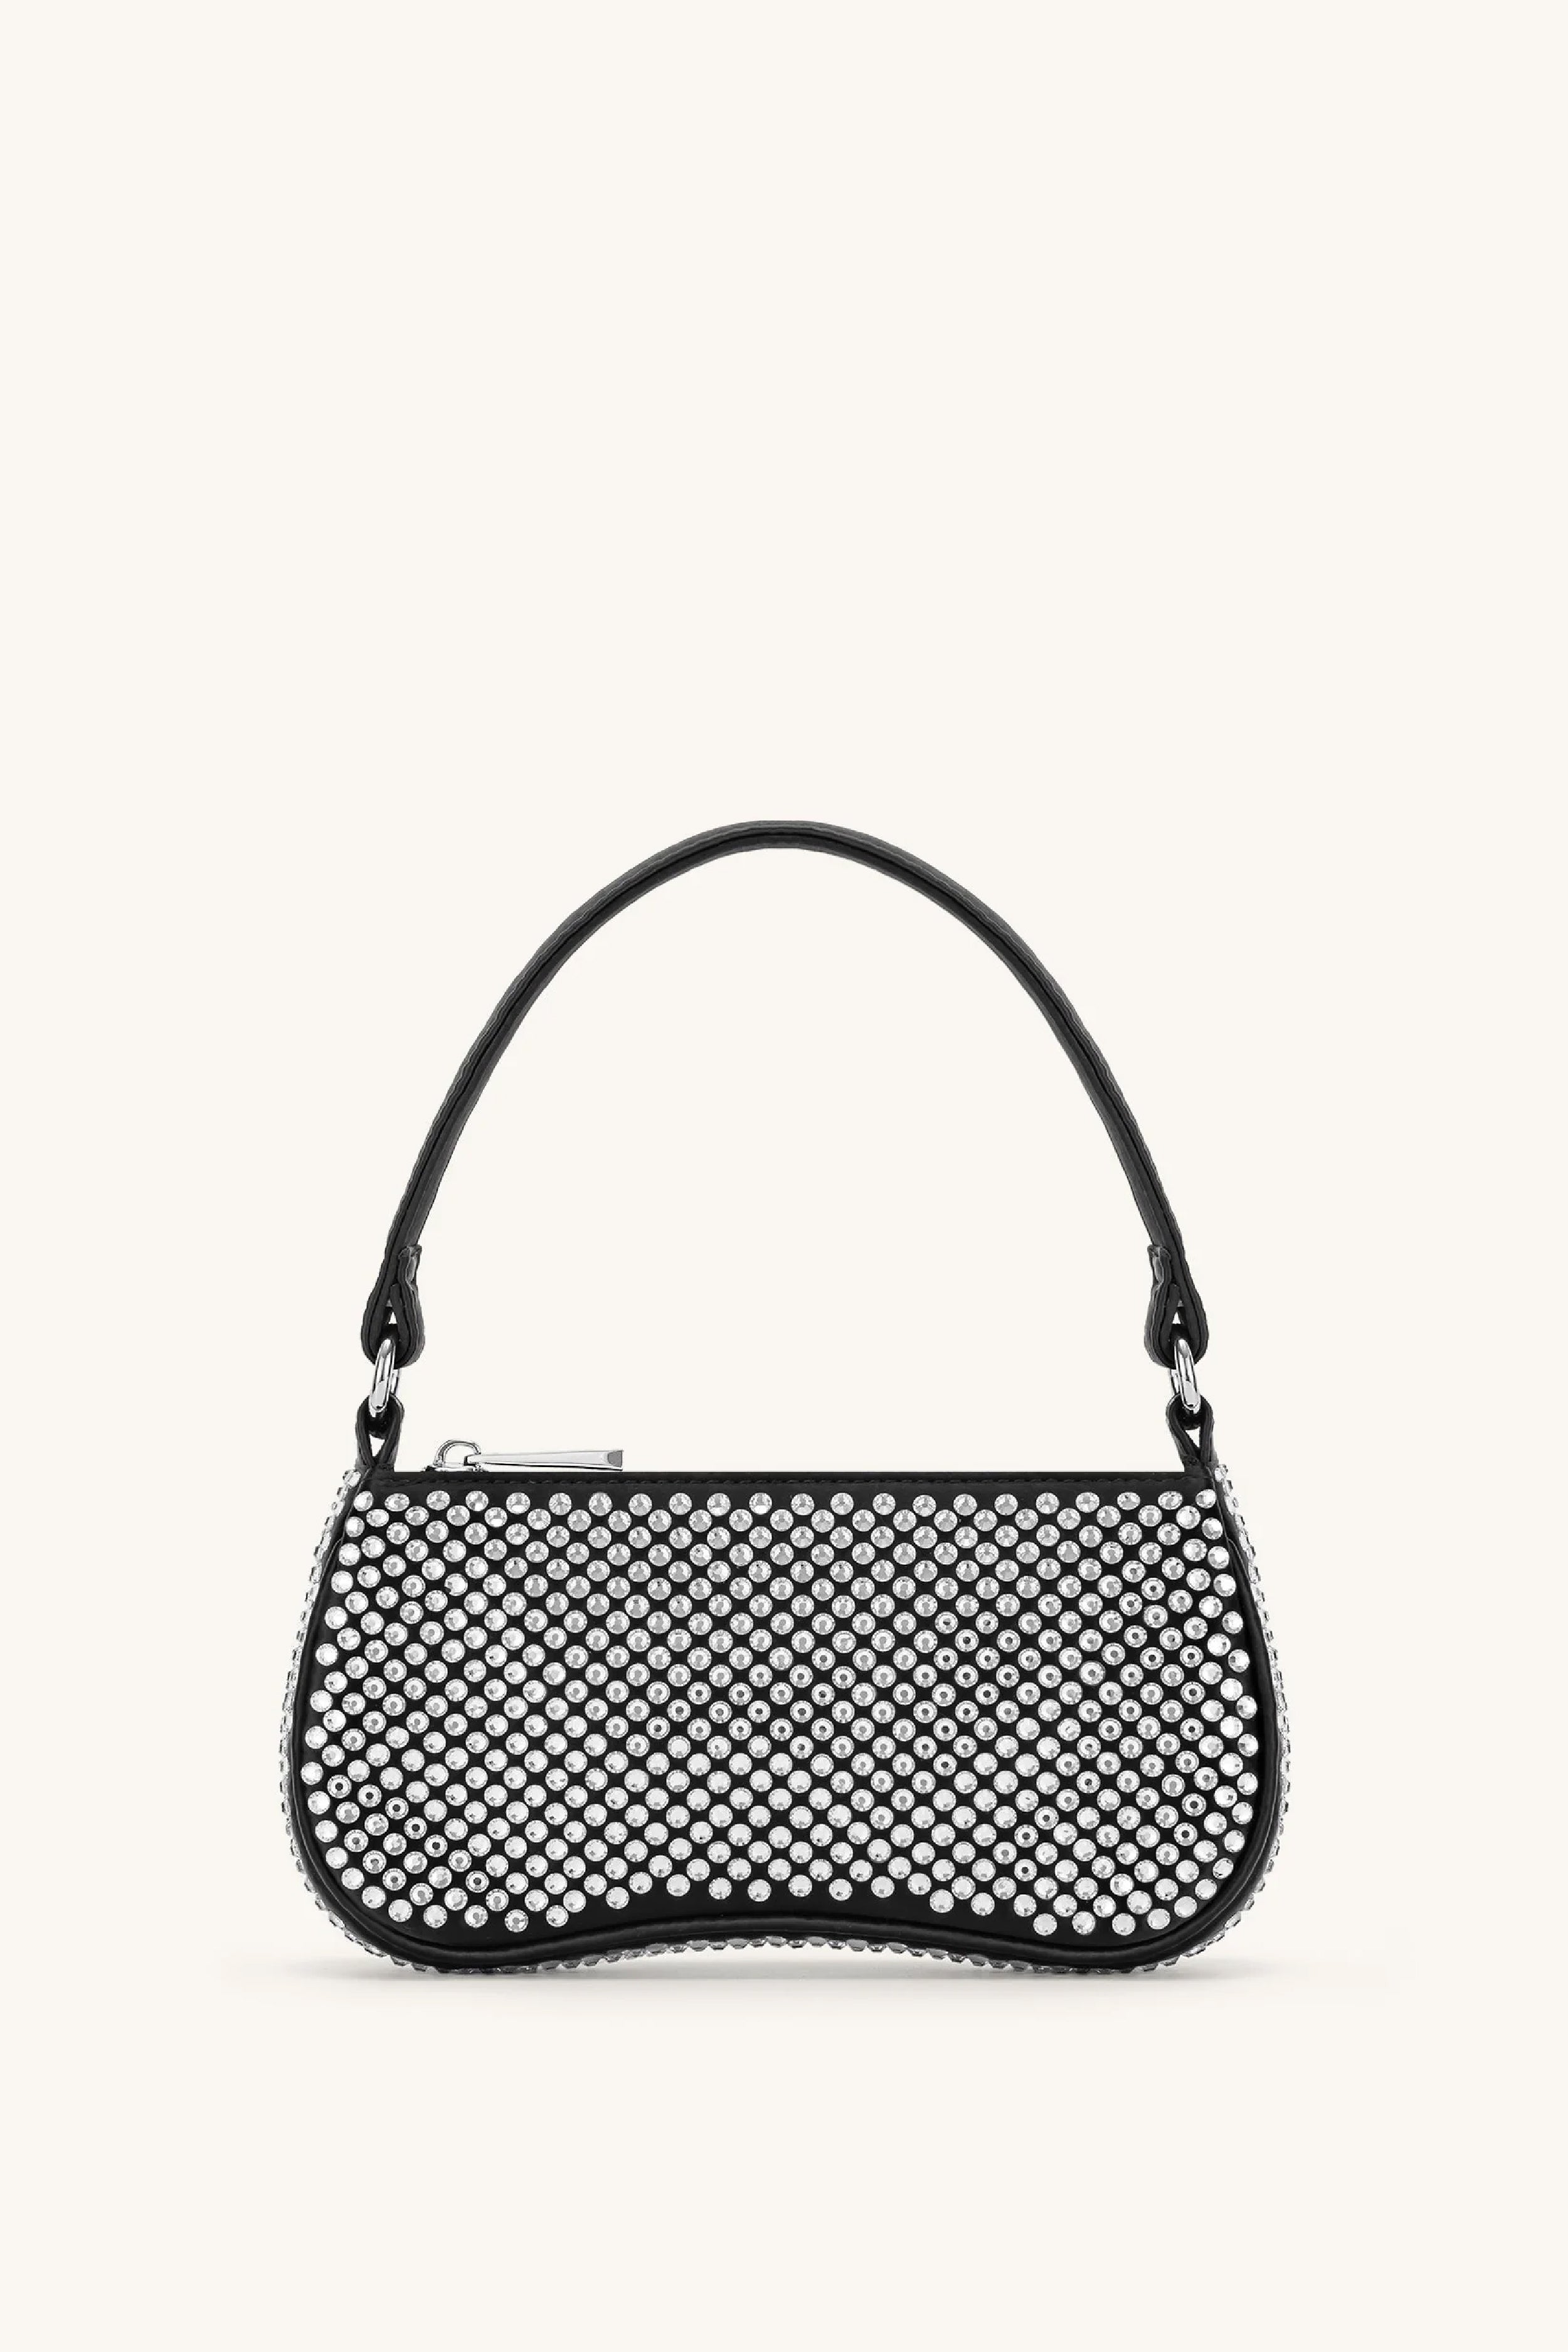  Customer reviews: JW PEI Gabbi Artifical Crystal Medium Ruched  Hobo Handbag - Black